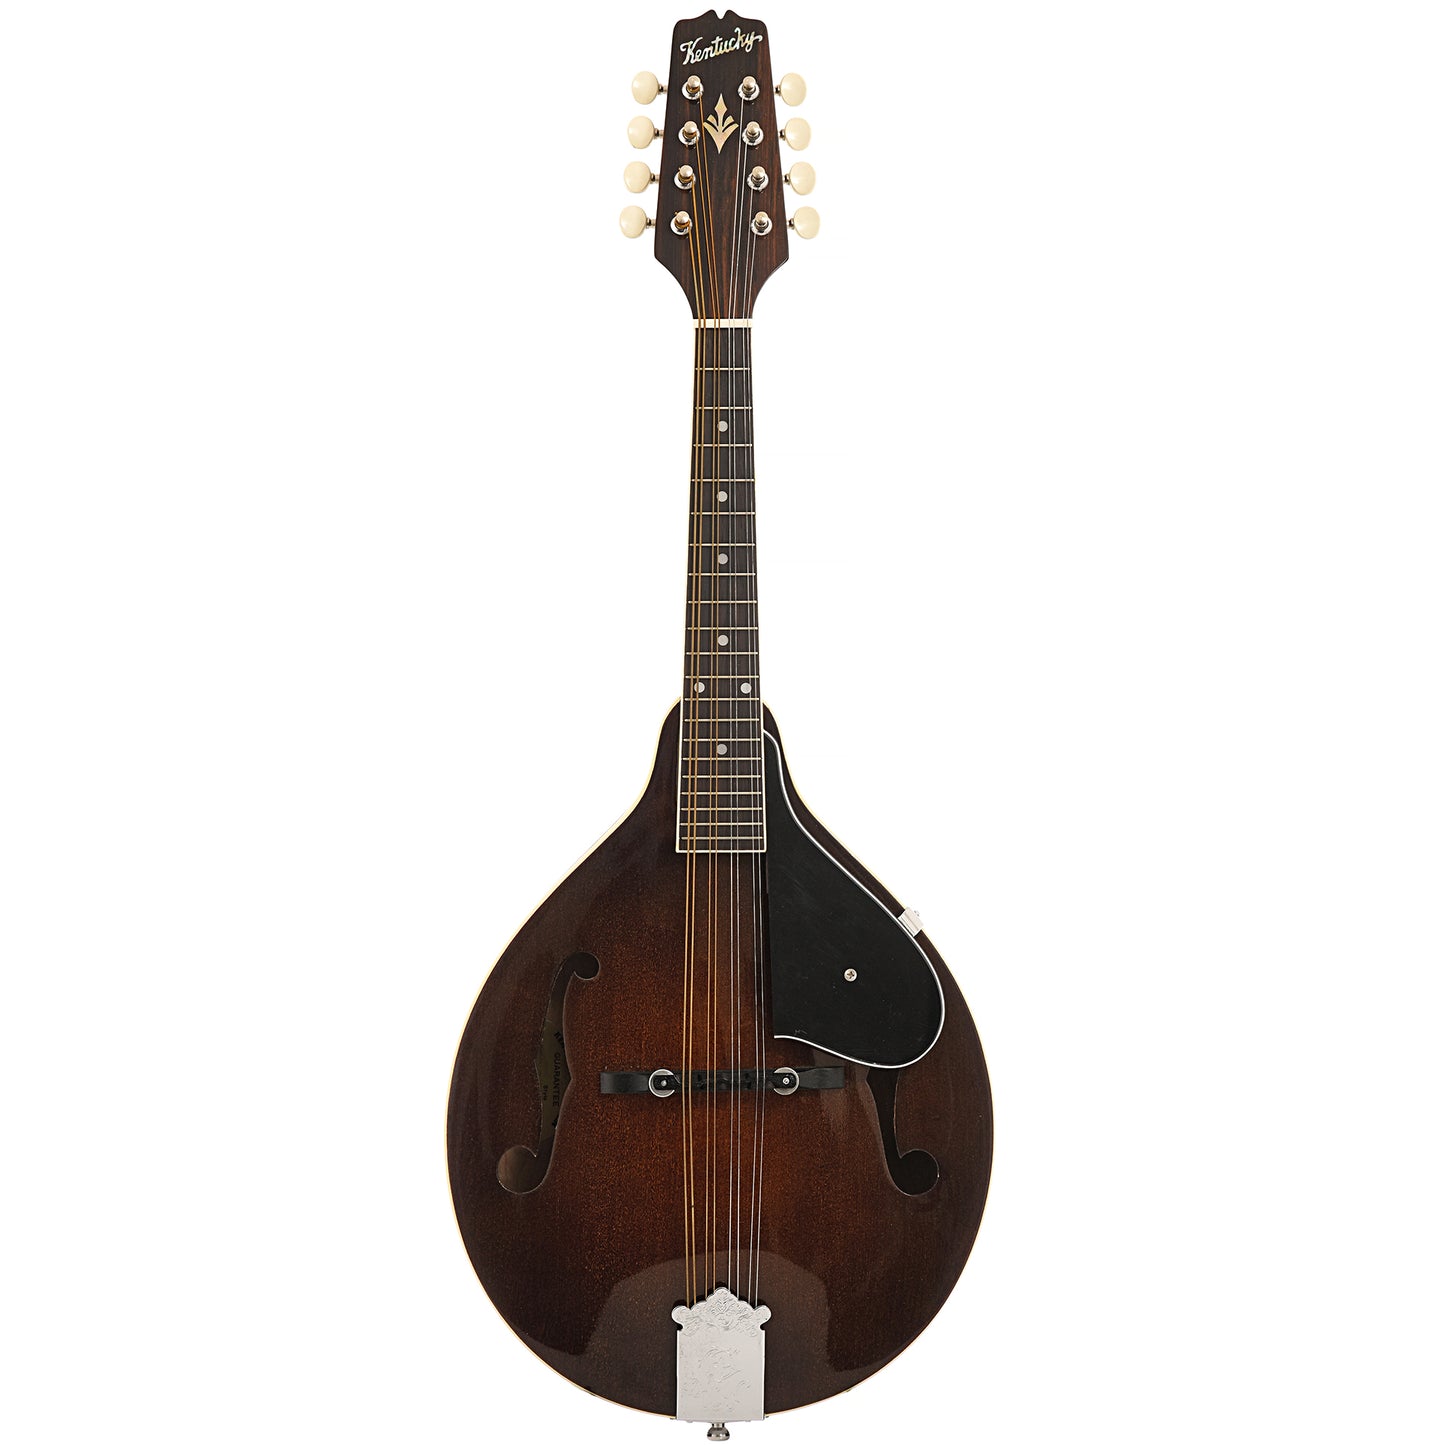 Full front of Kentucky KM250S mandolin